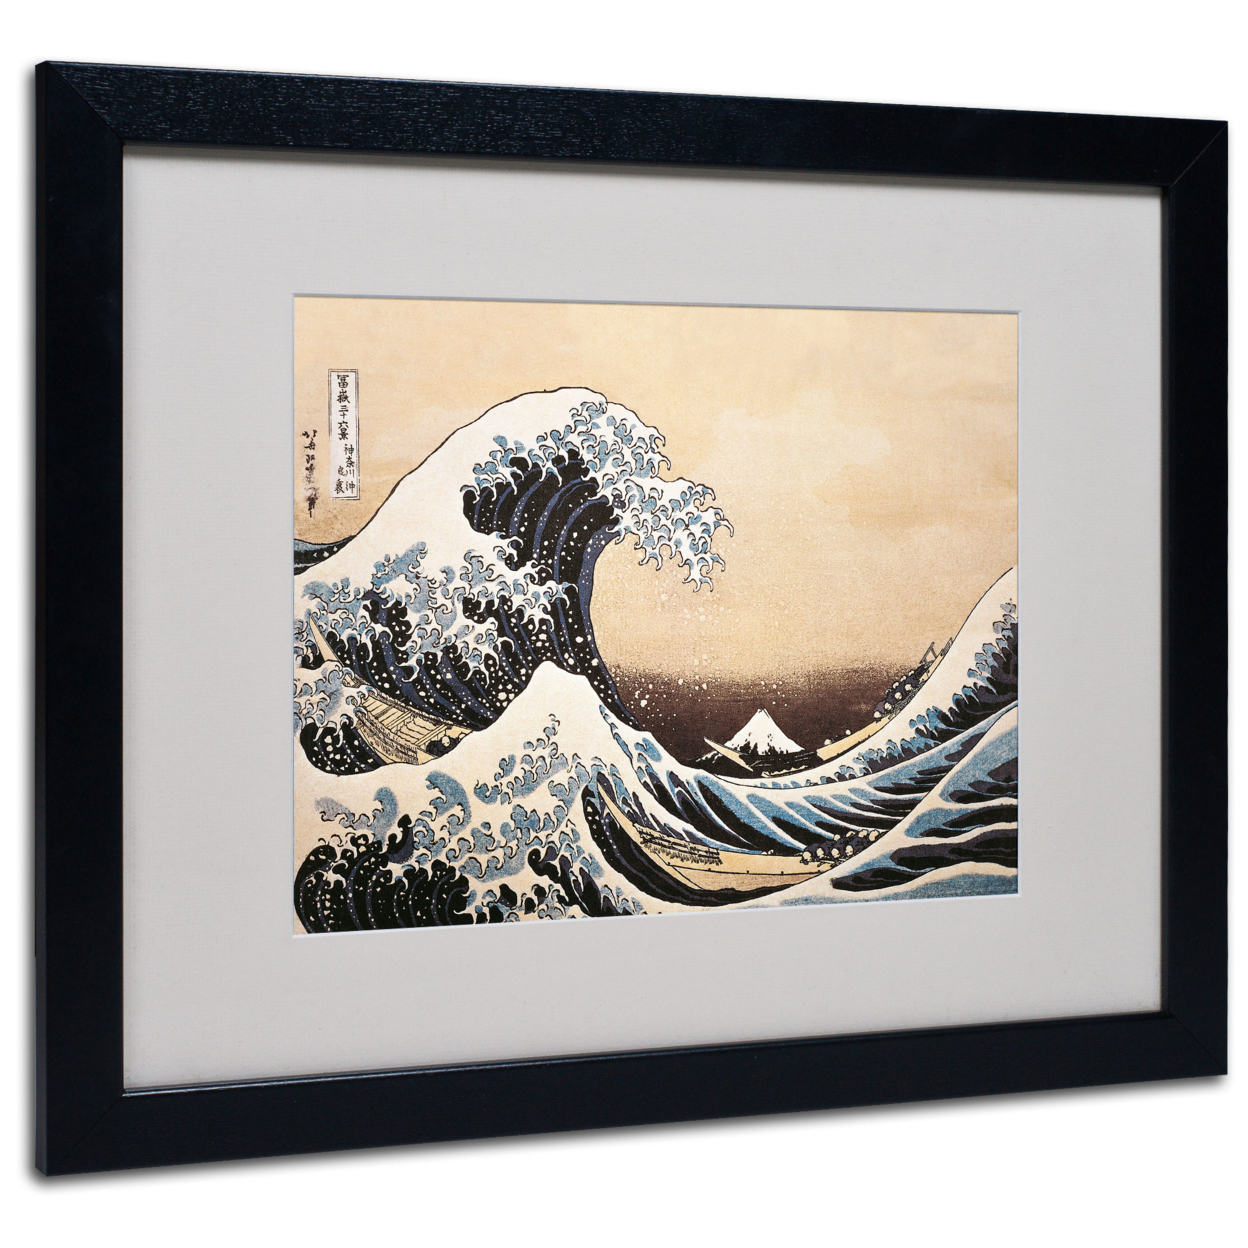 Katsushika Hokusai 'The Great Wave' Black Wooden Framed Art 18 X 22 Inches